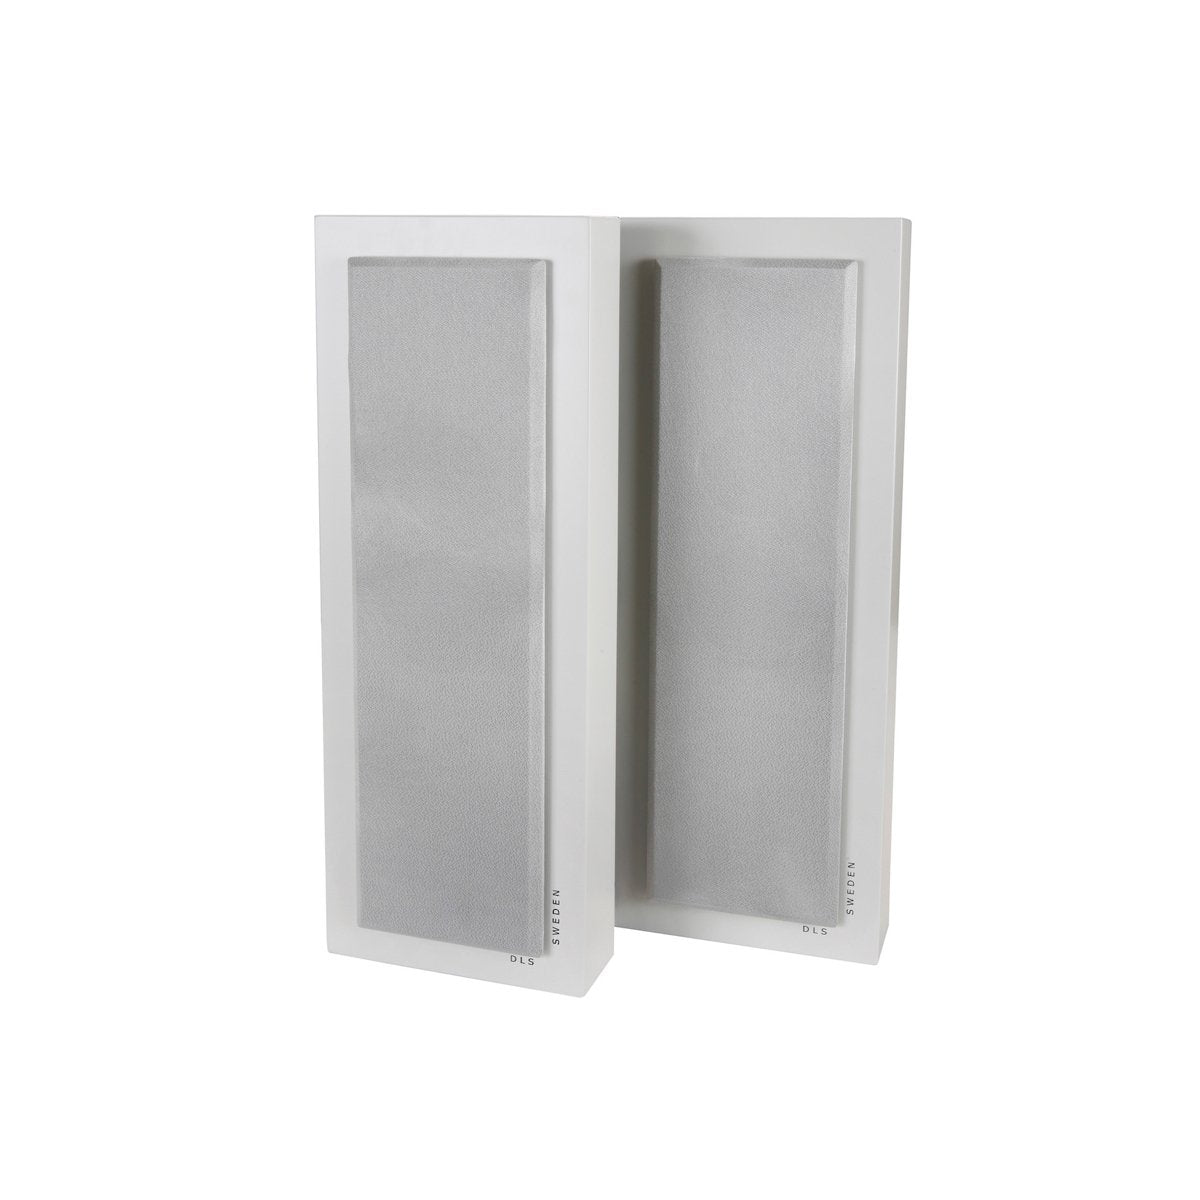 DLS Flatbox Slim Large On wall speaker - Pair - Auratech LLC